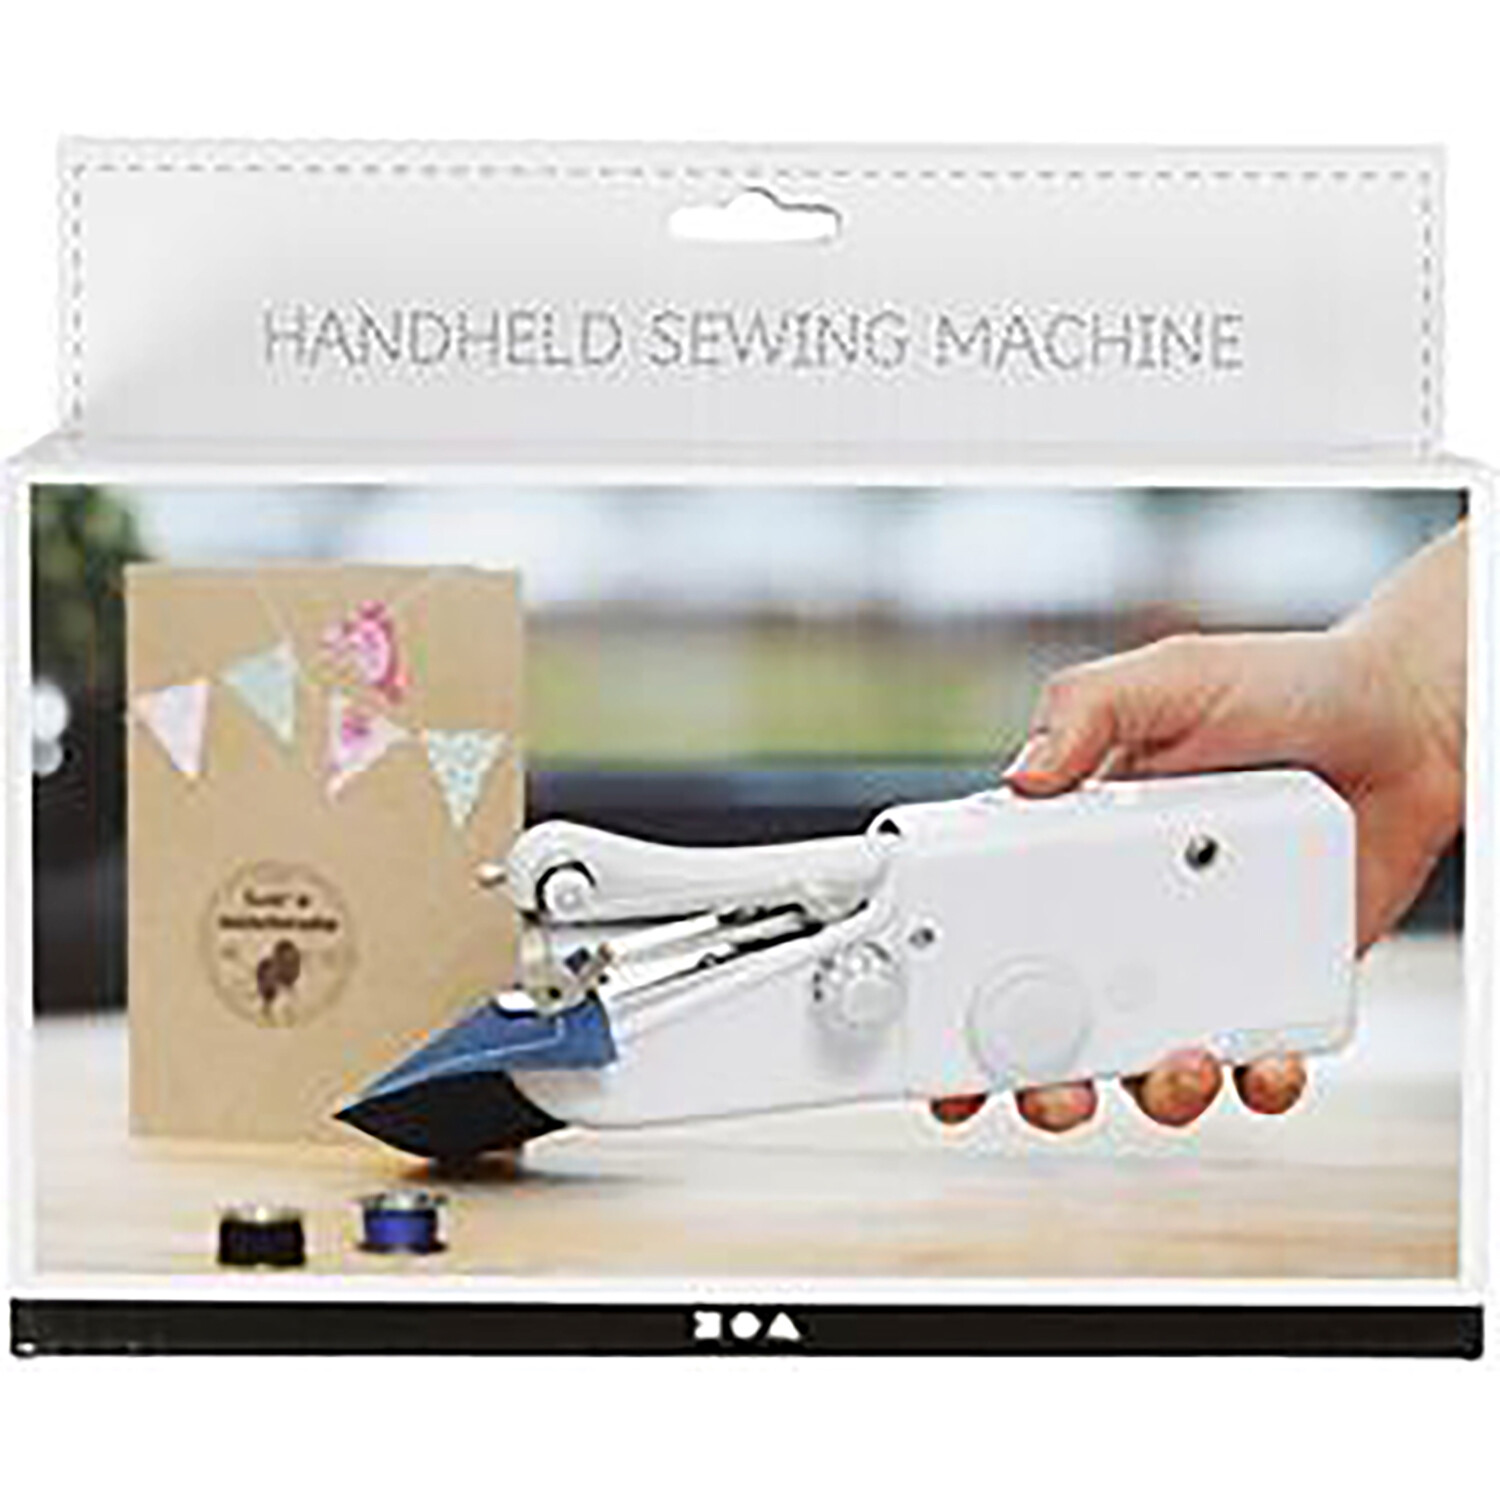 Creativ Handheld Sewing Machine Image 2